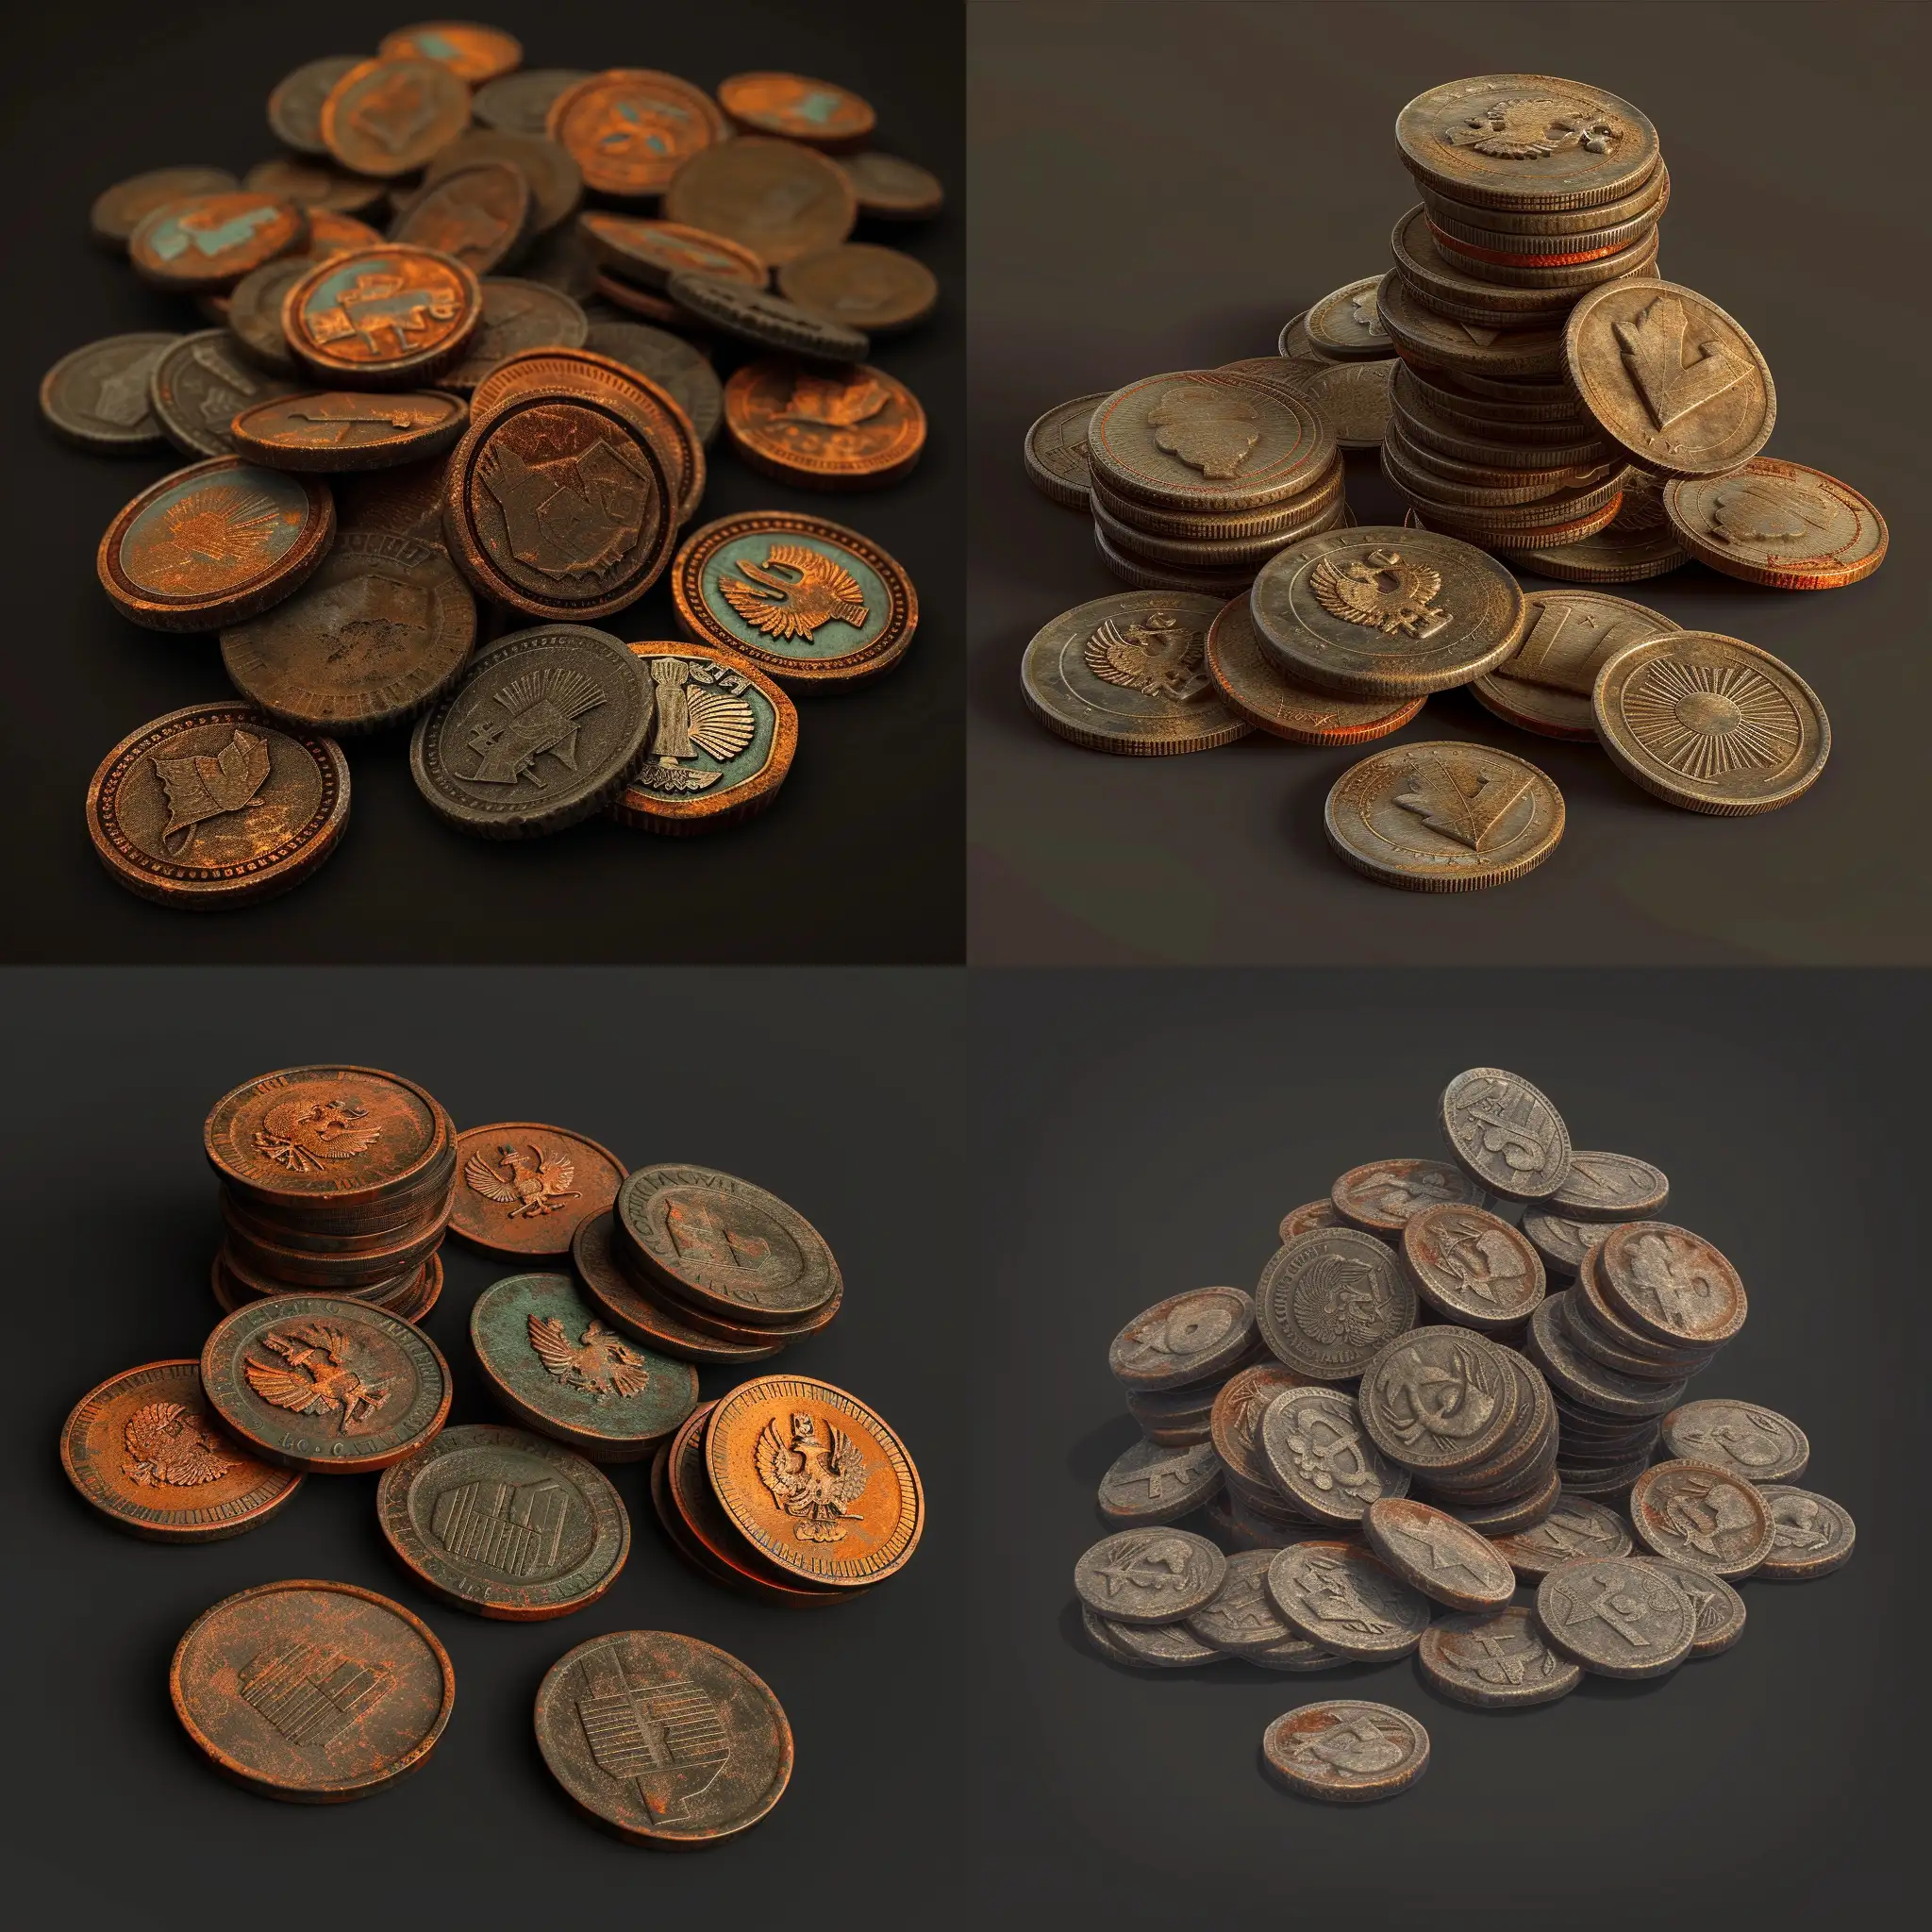 Vintage-Soviet-Coins-in-StalkerStyle-Isometric-Set-Realistic-3D-Render